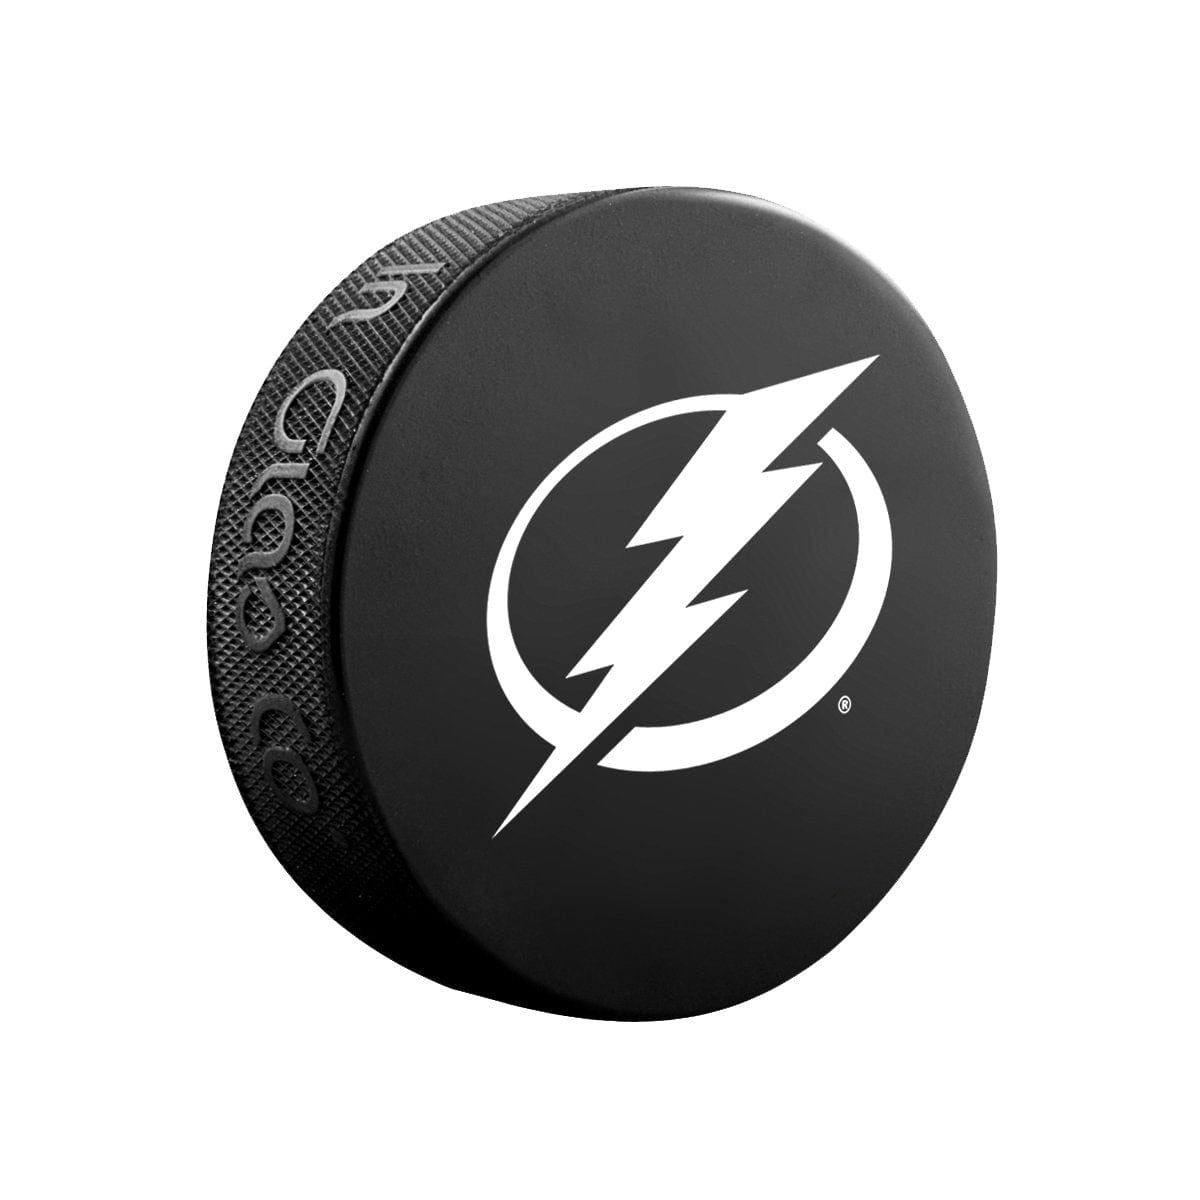 Tampa Bay Lightning Inglasco NHL Basic Logo Hockey Puck - The Hockey Shop Source For Sports